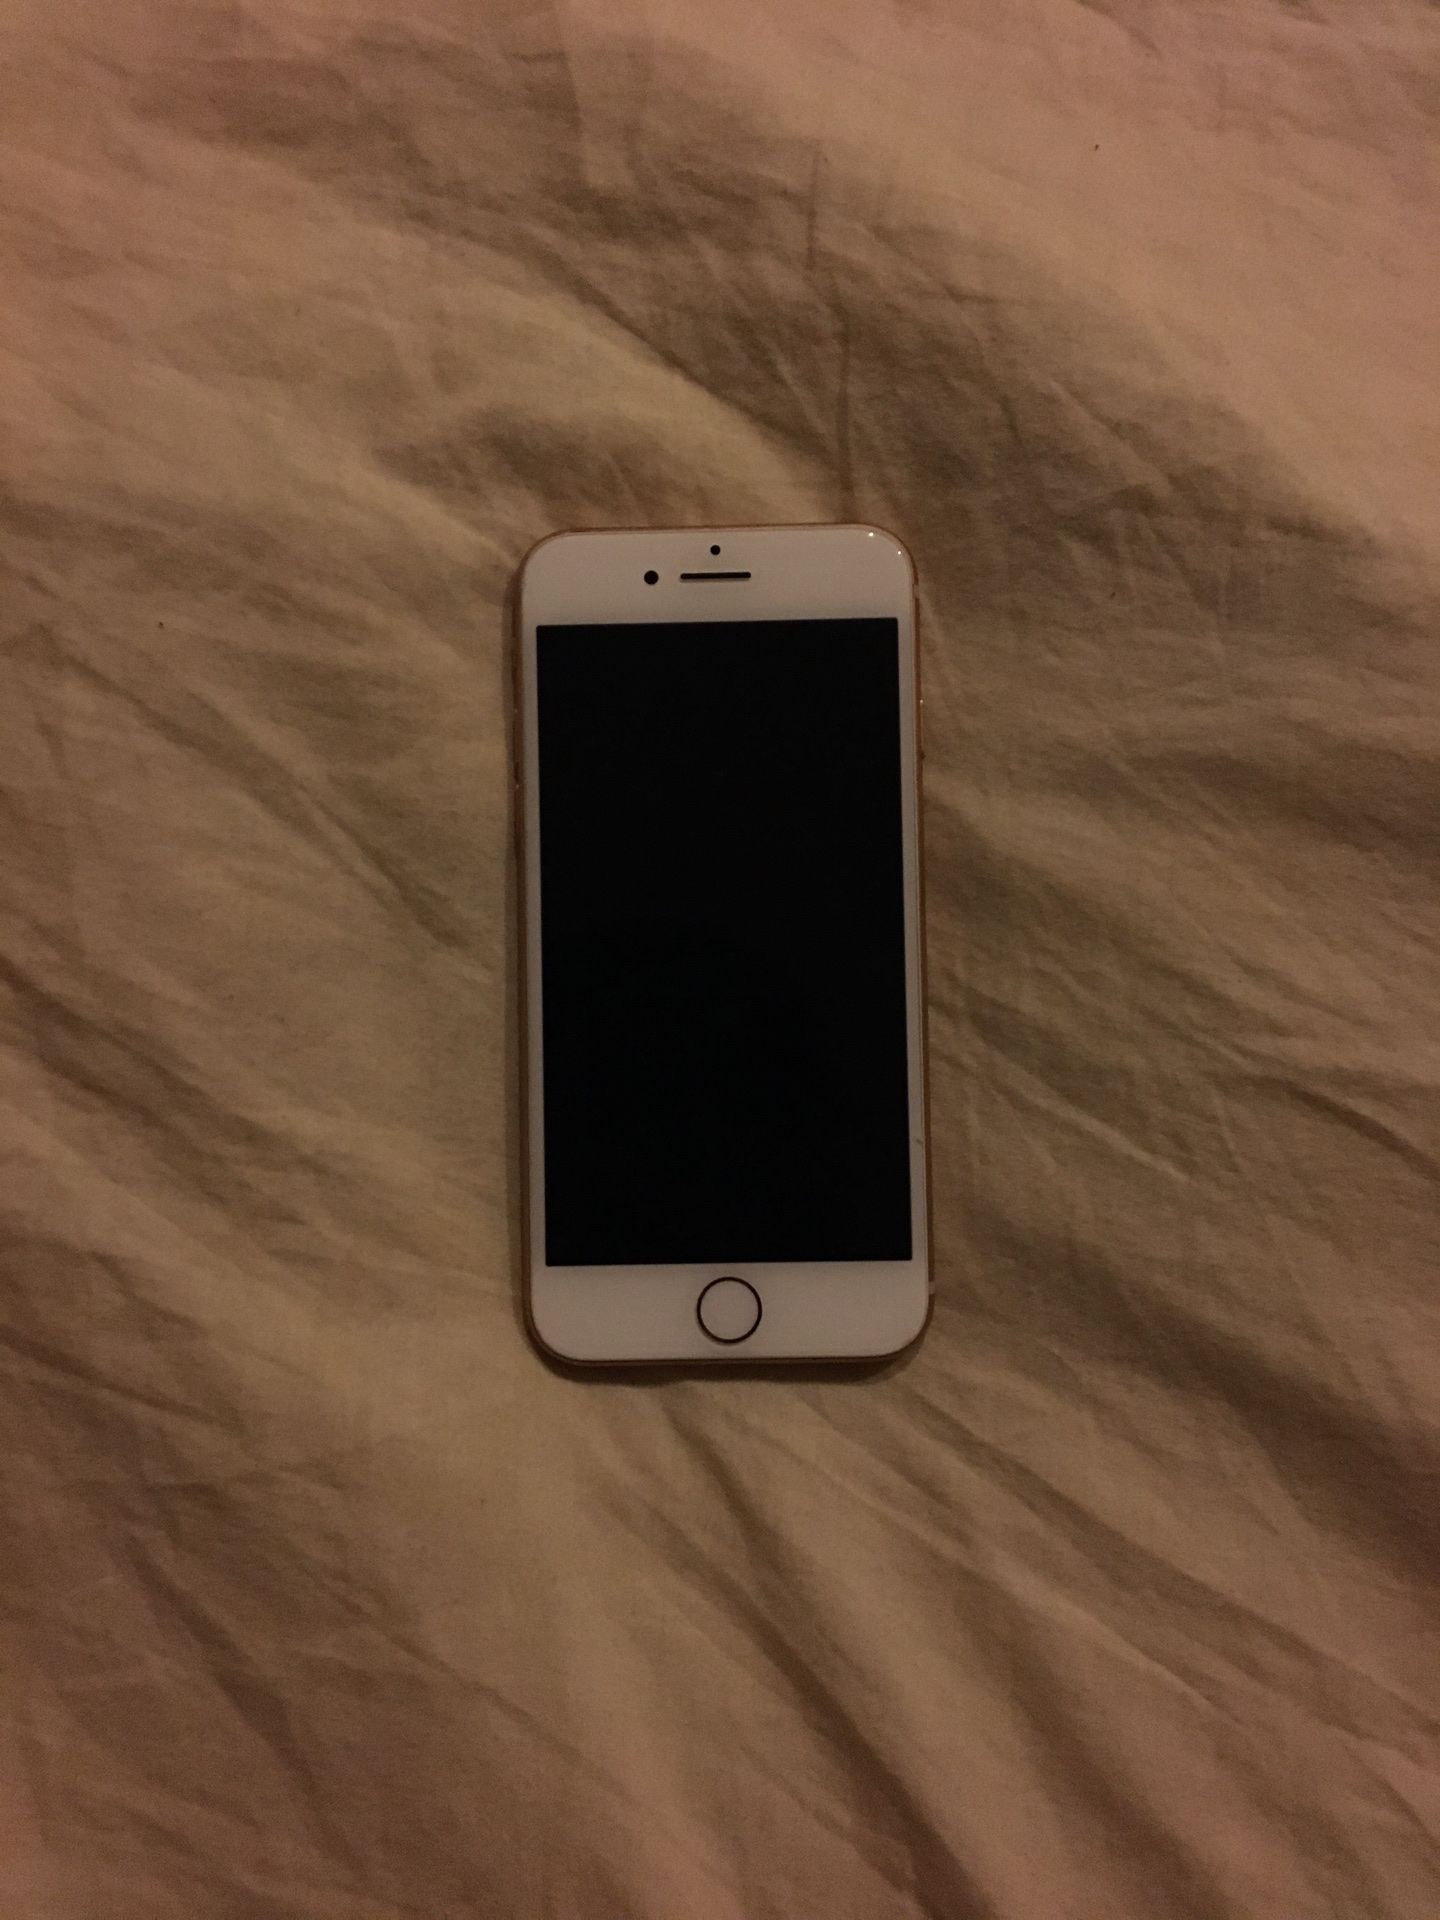 Apple iPhone 8 unlocked